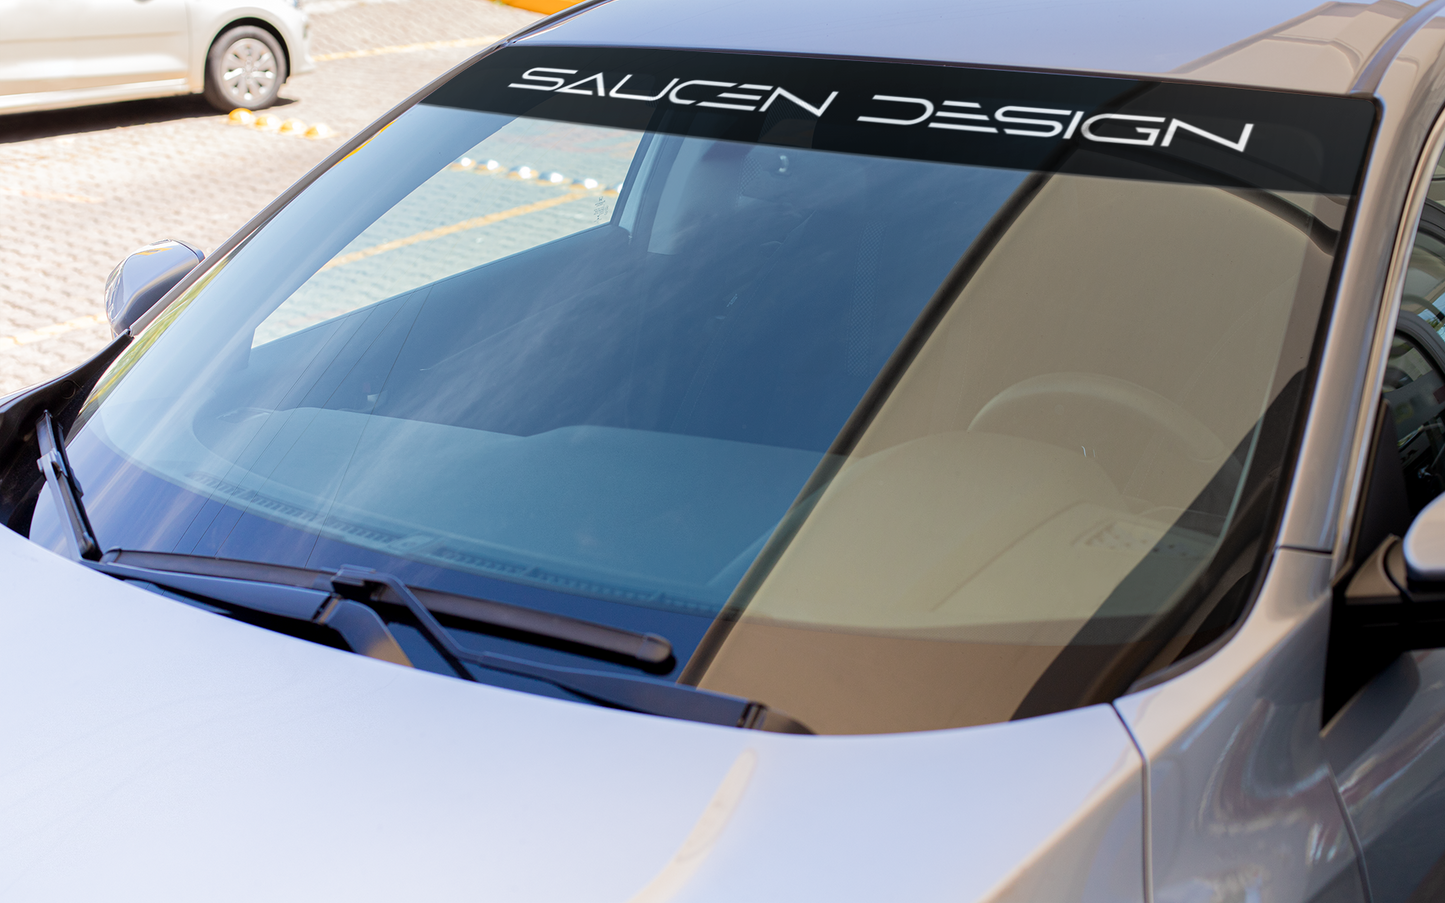 Saucen Design Windshield Banner - Gloss Black/White